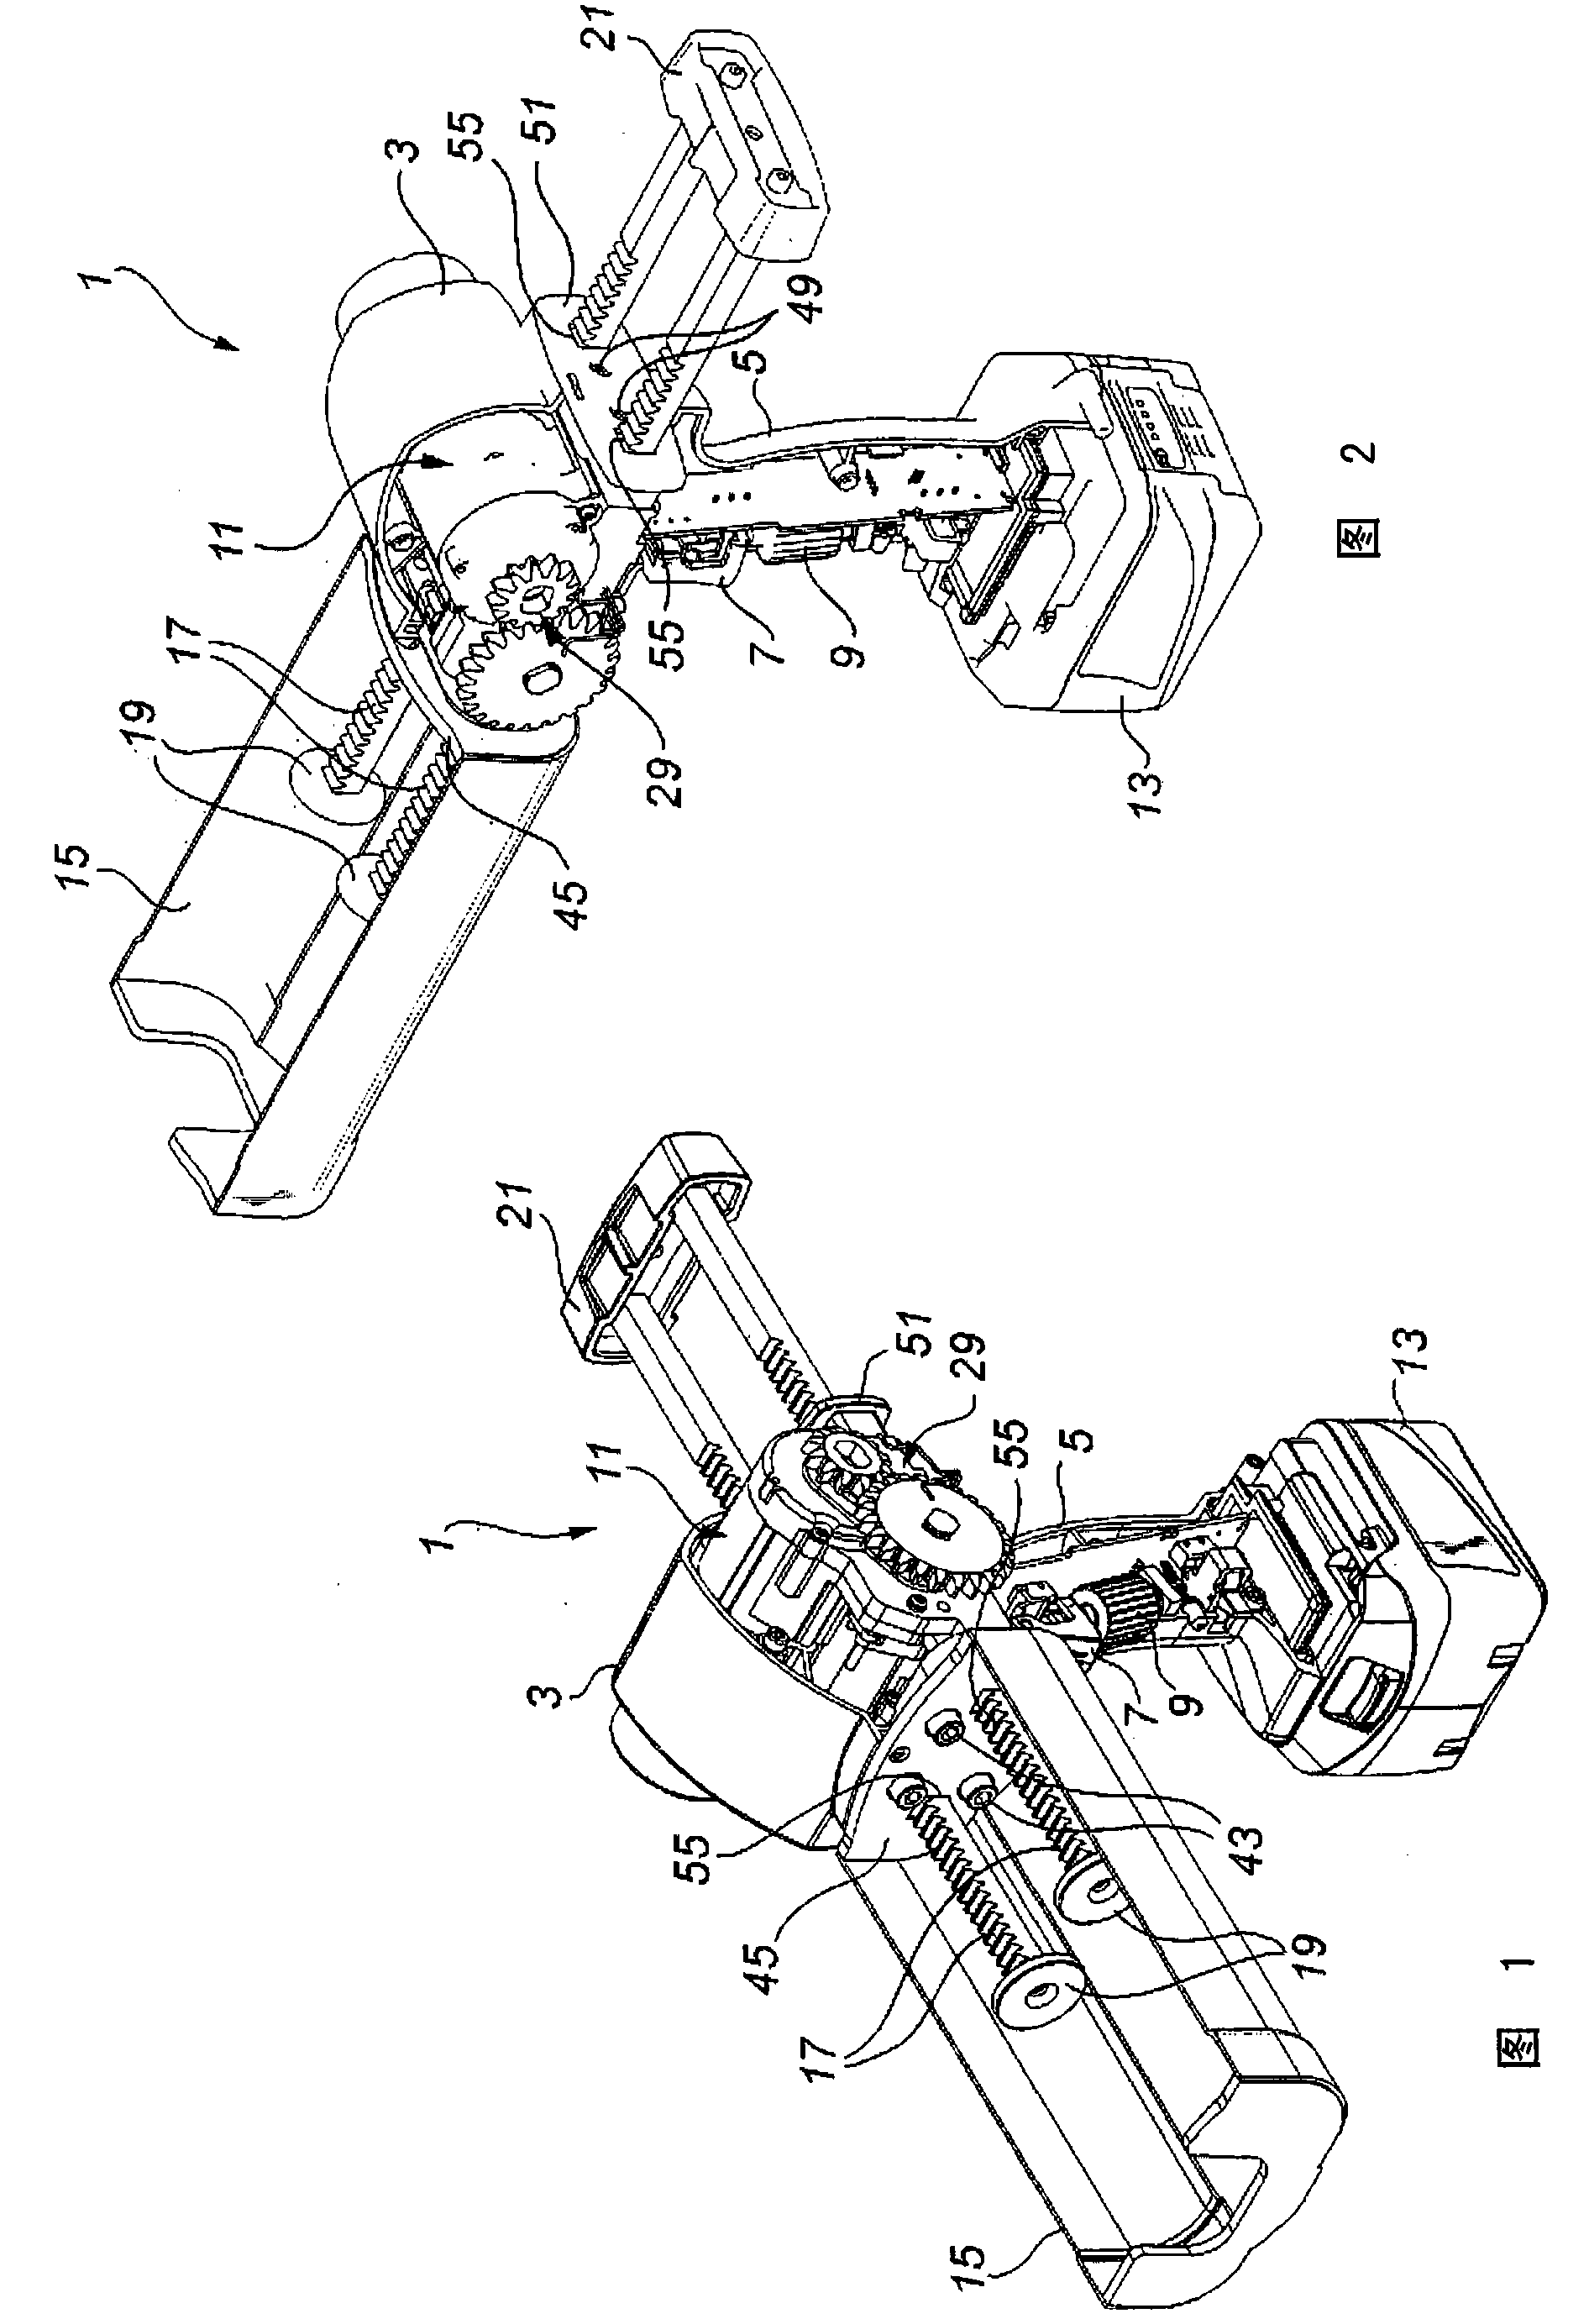 A motorized viscous material dispenser